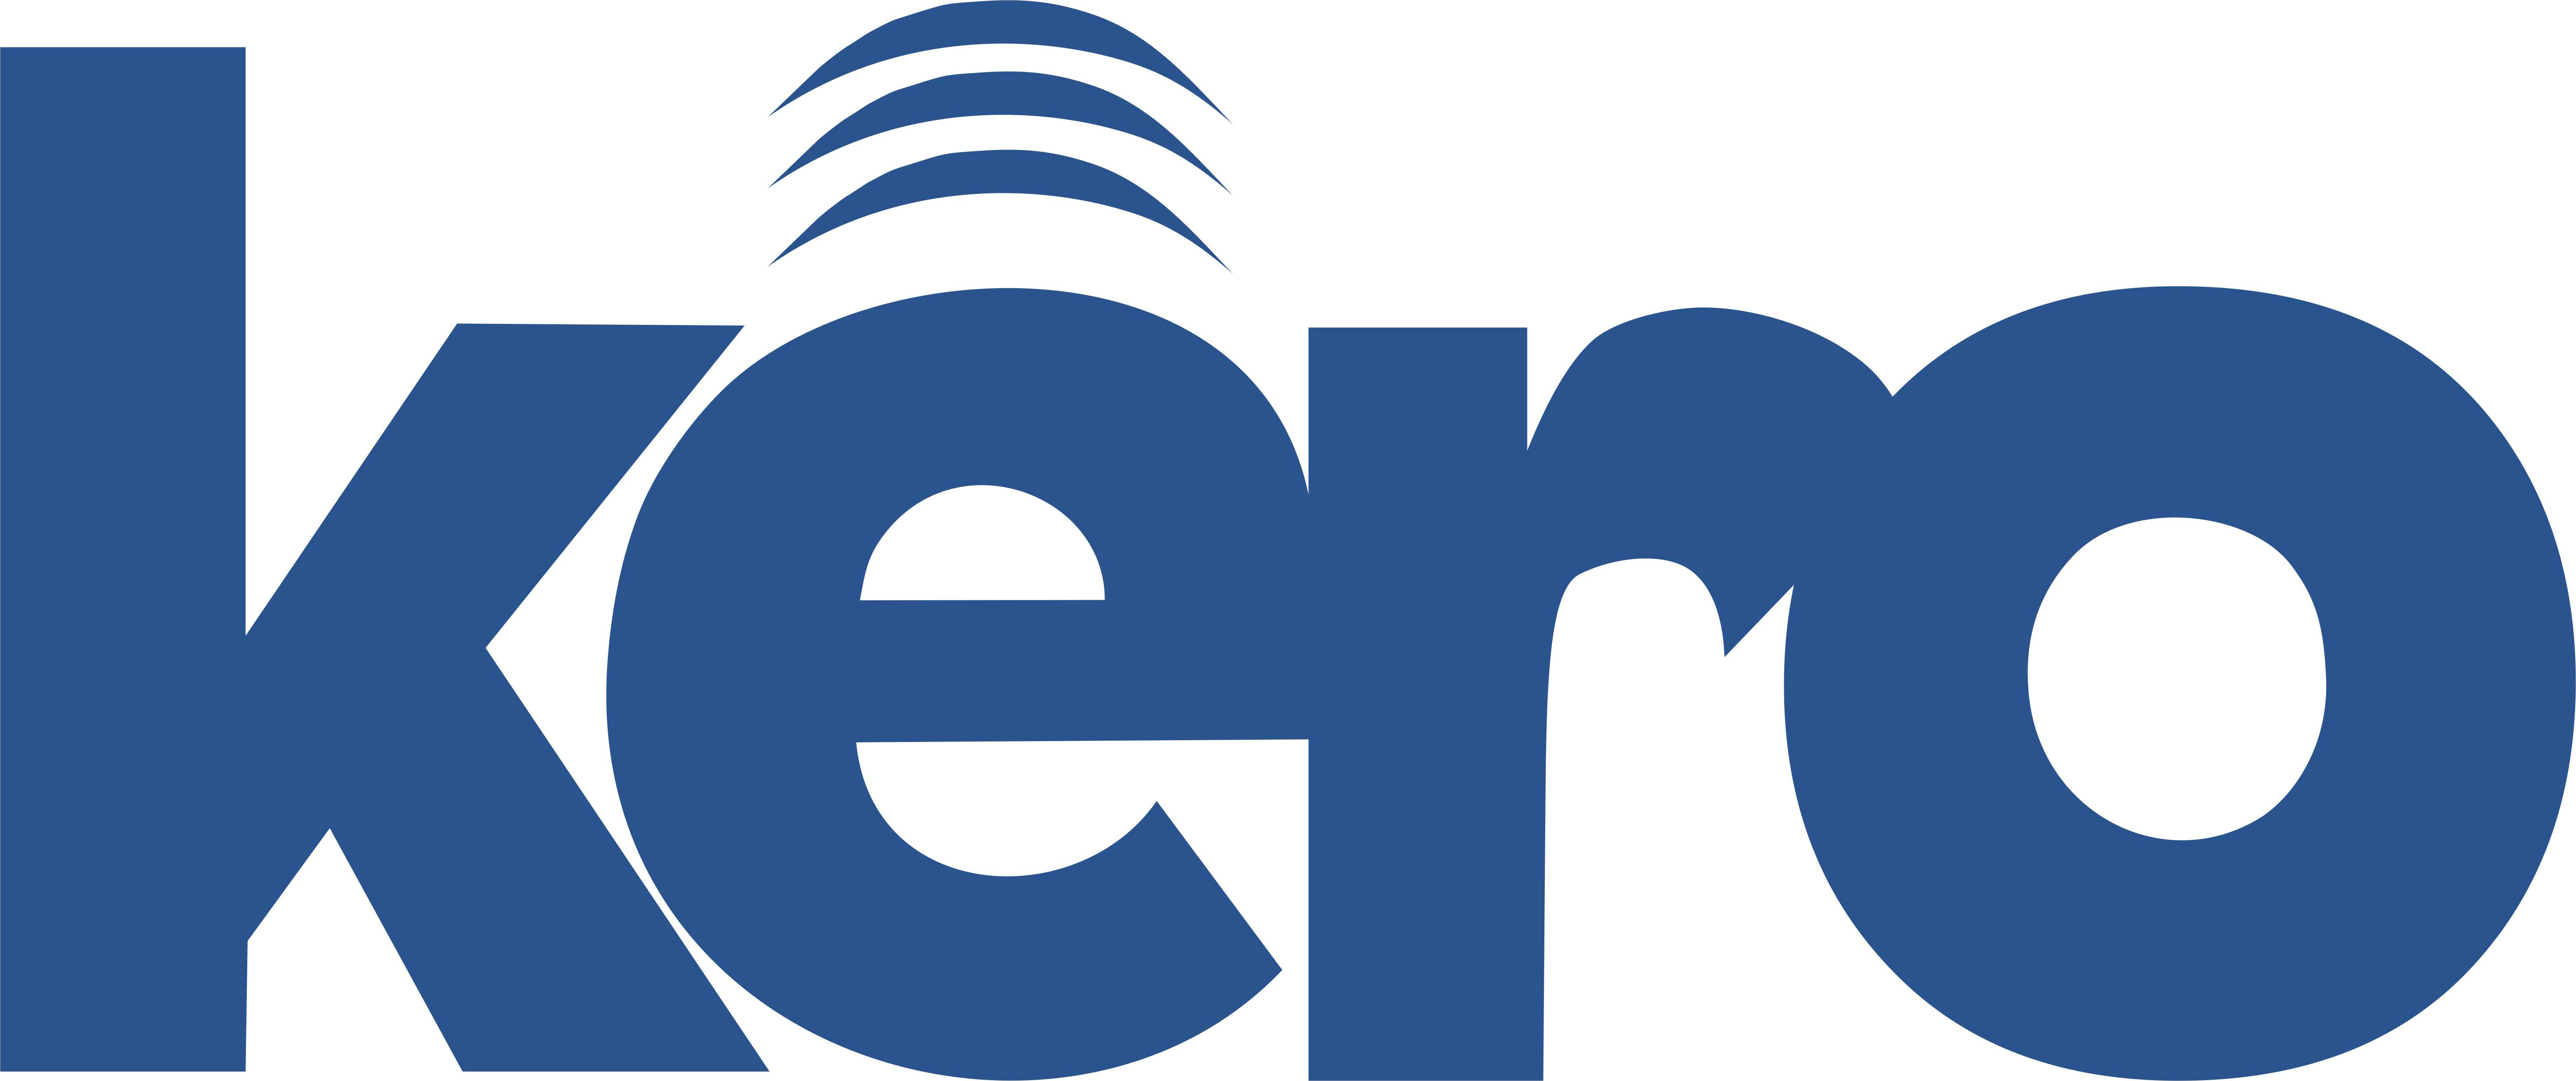 Logotipo de KERO